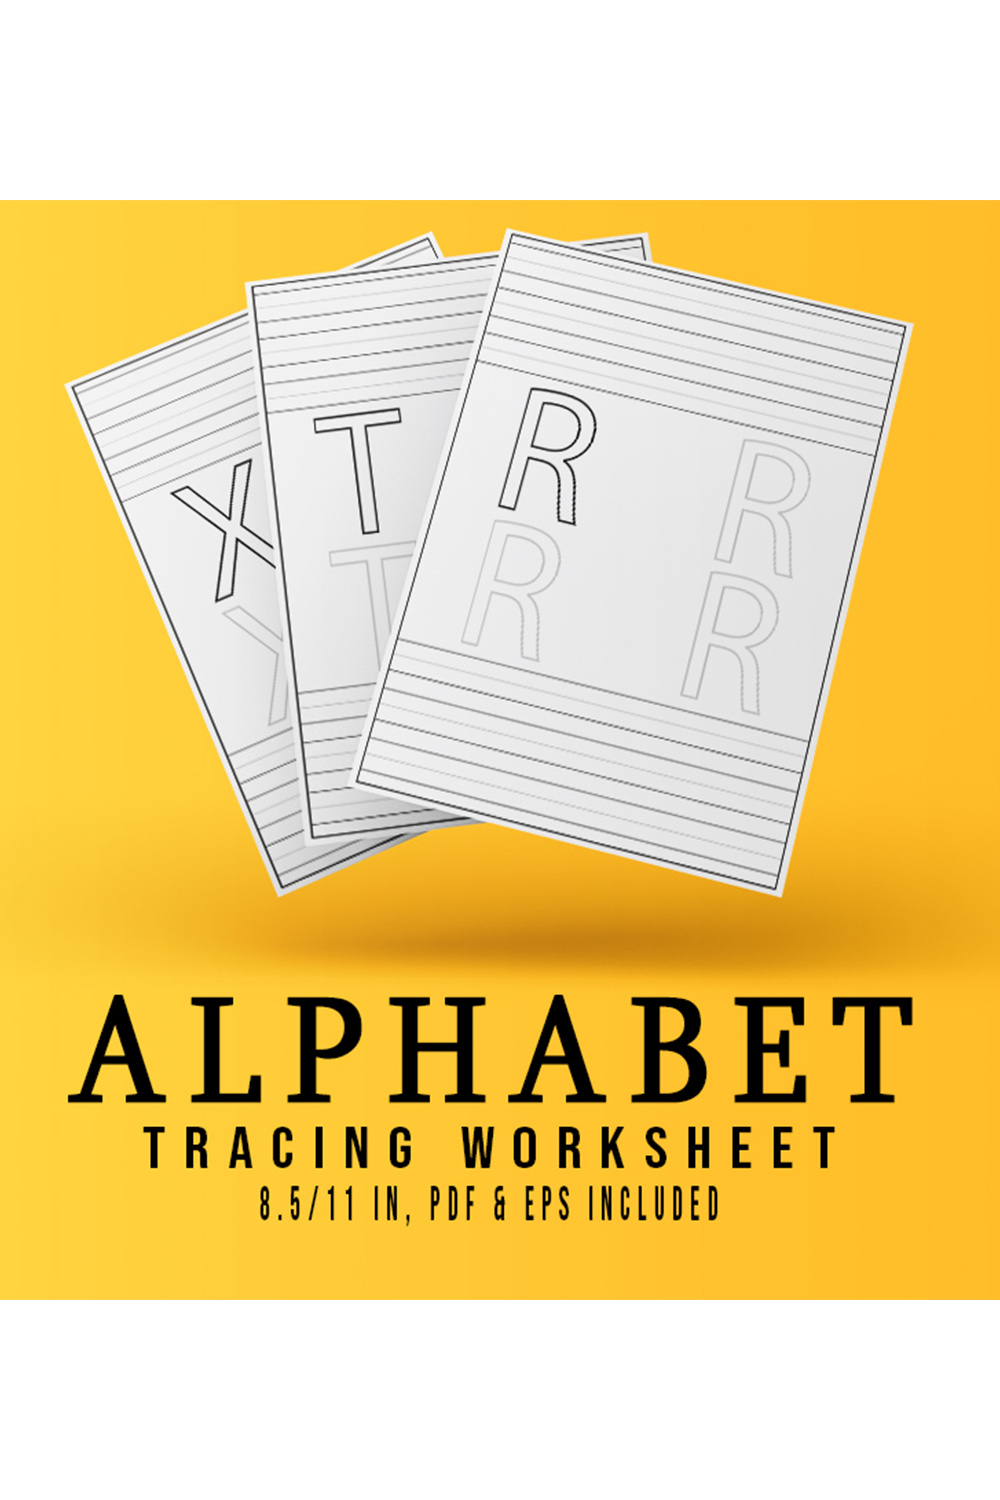 Alphabets A to Z Words Tracing Worksheets Bundle pinterest image.